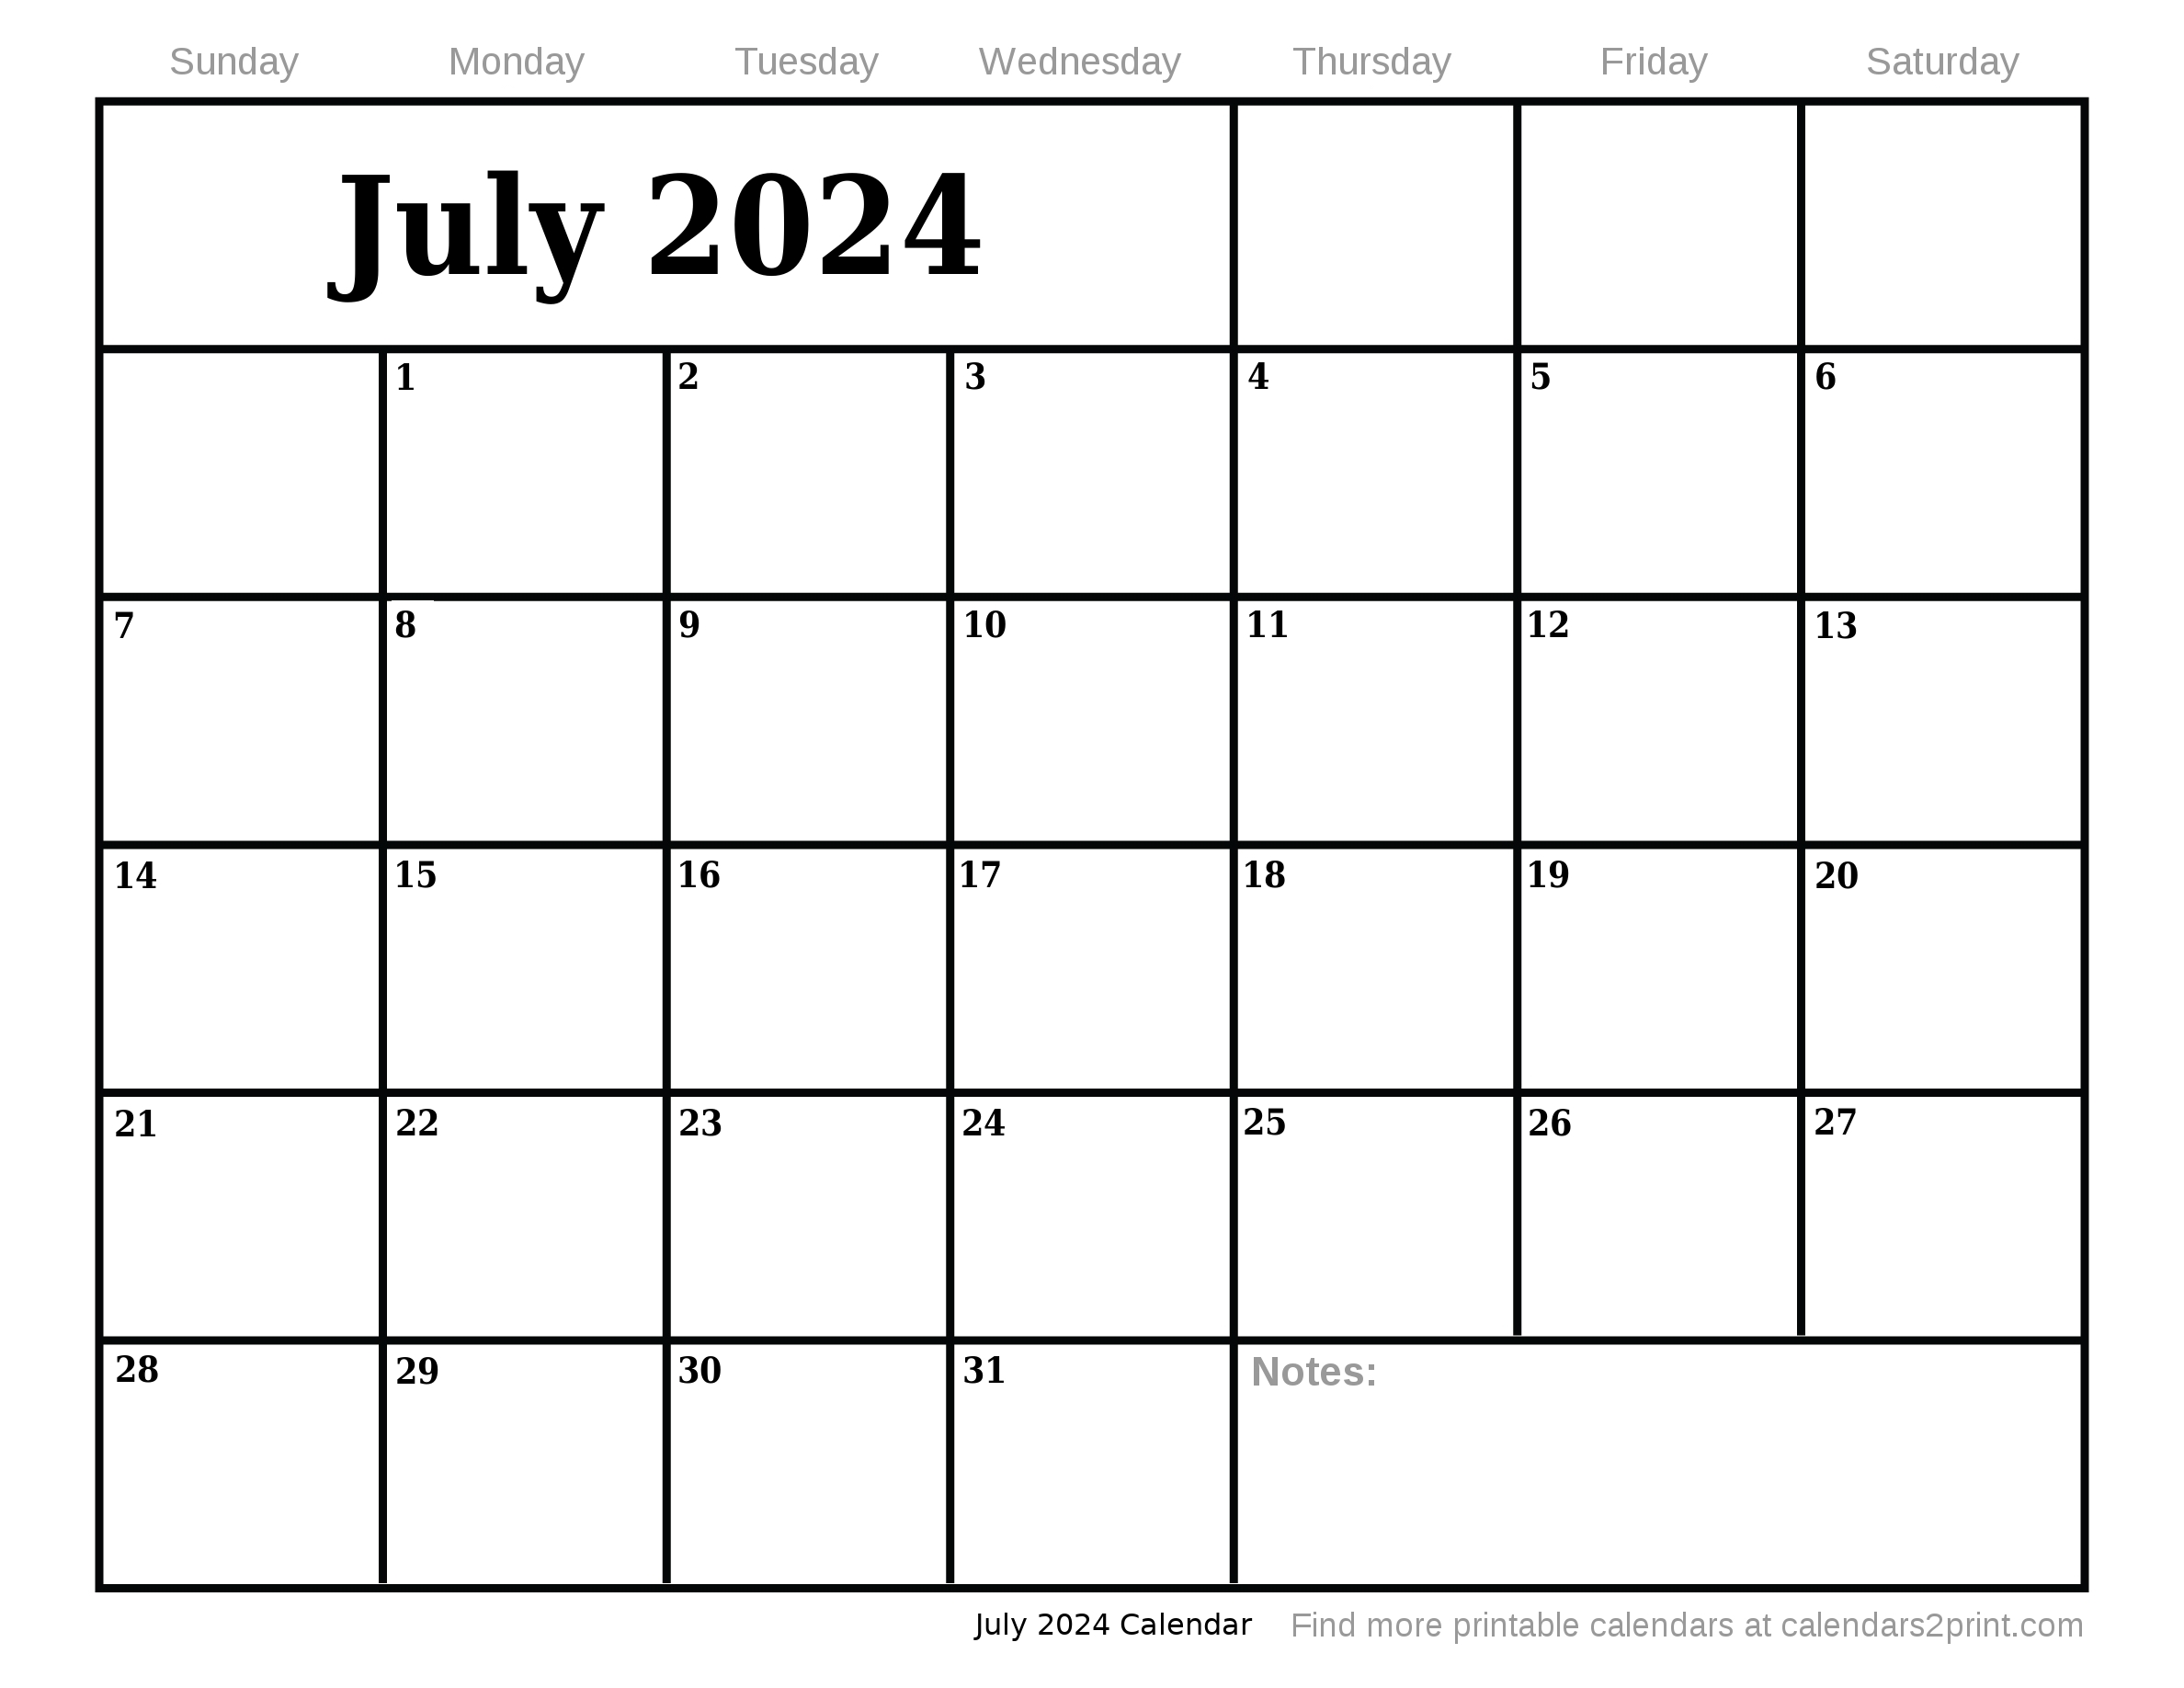 Jul 2024 Printable Calendar